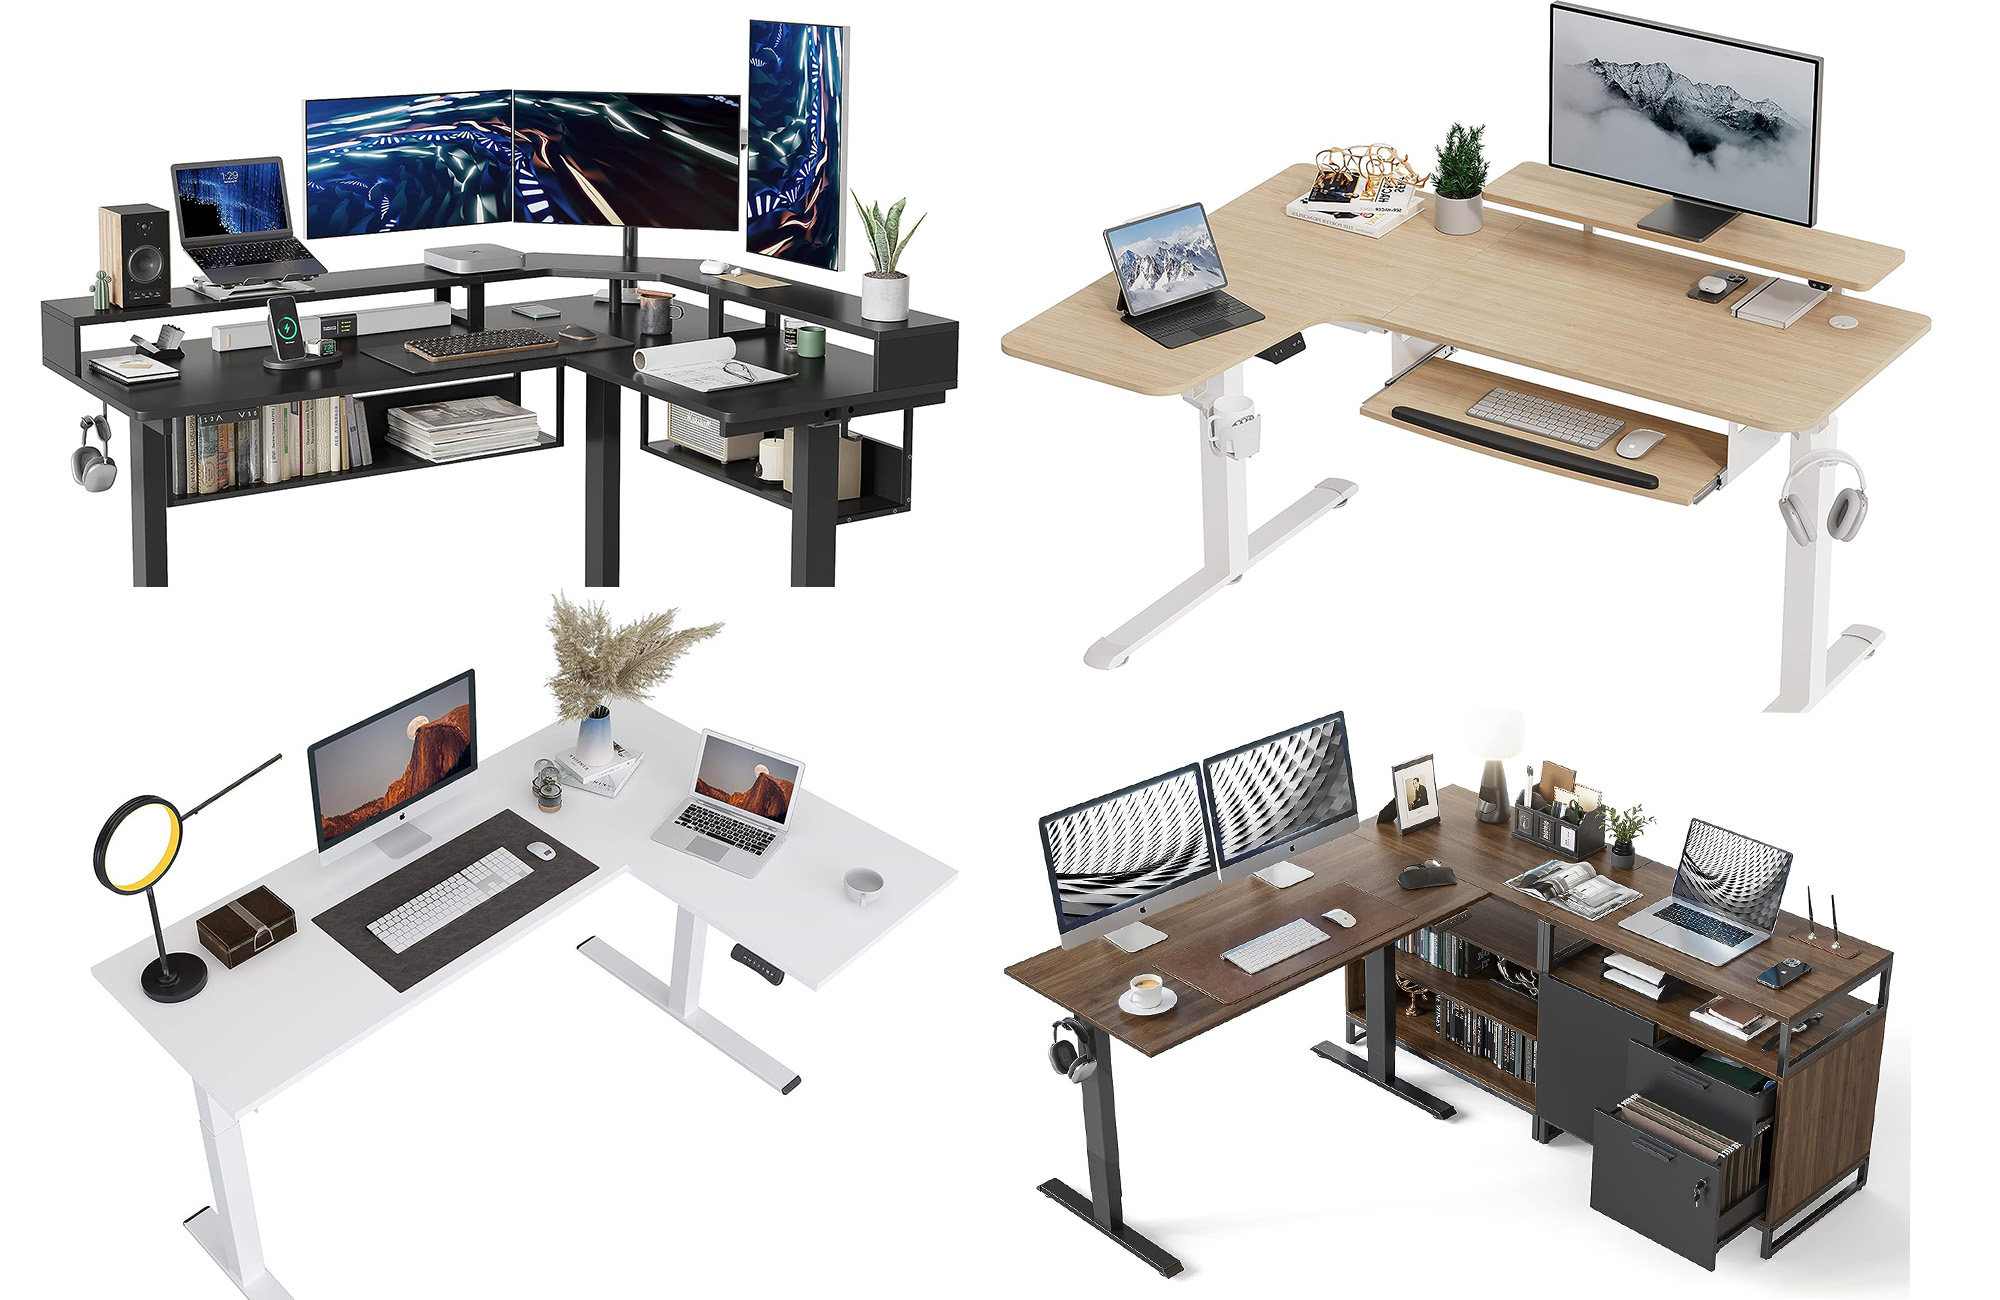 https://www.popsci.com/uploads/2022/02/02/best-l-shaped-desks.jpg?auto=webp